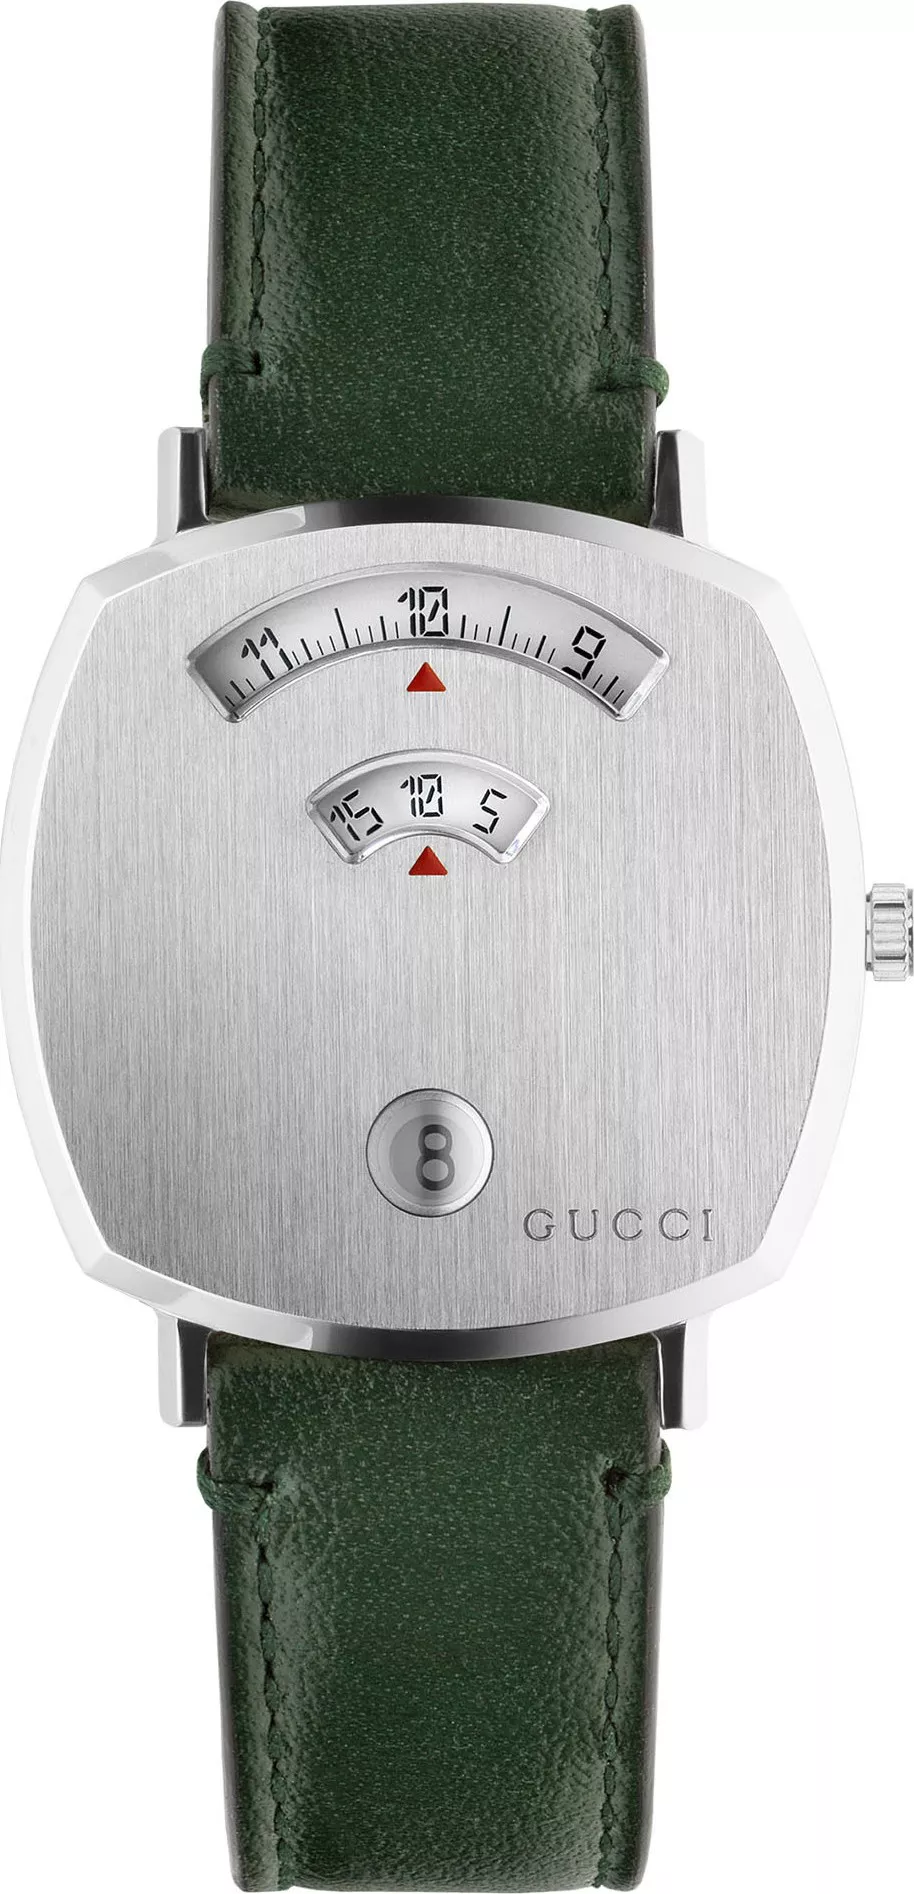 MSP: 93835 Gucci Grip Men's Watch 38mm 37,030,000